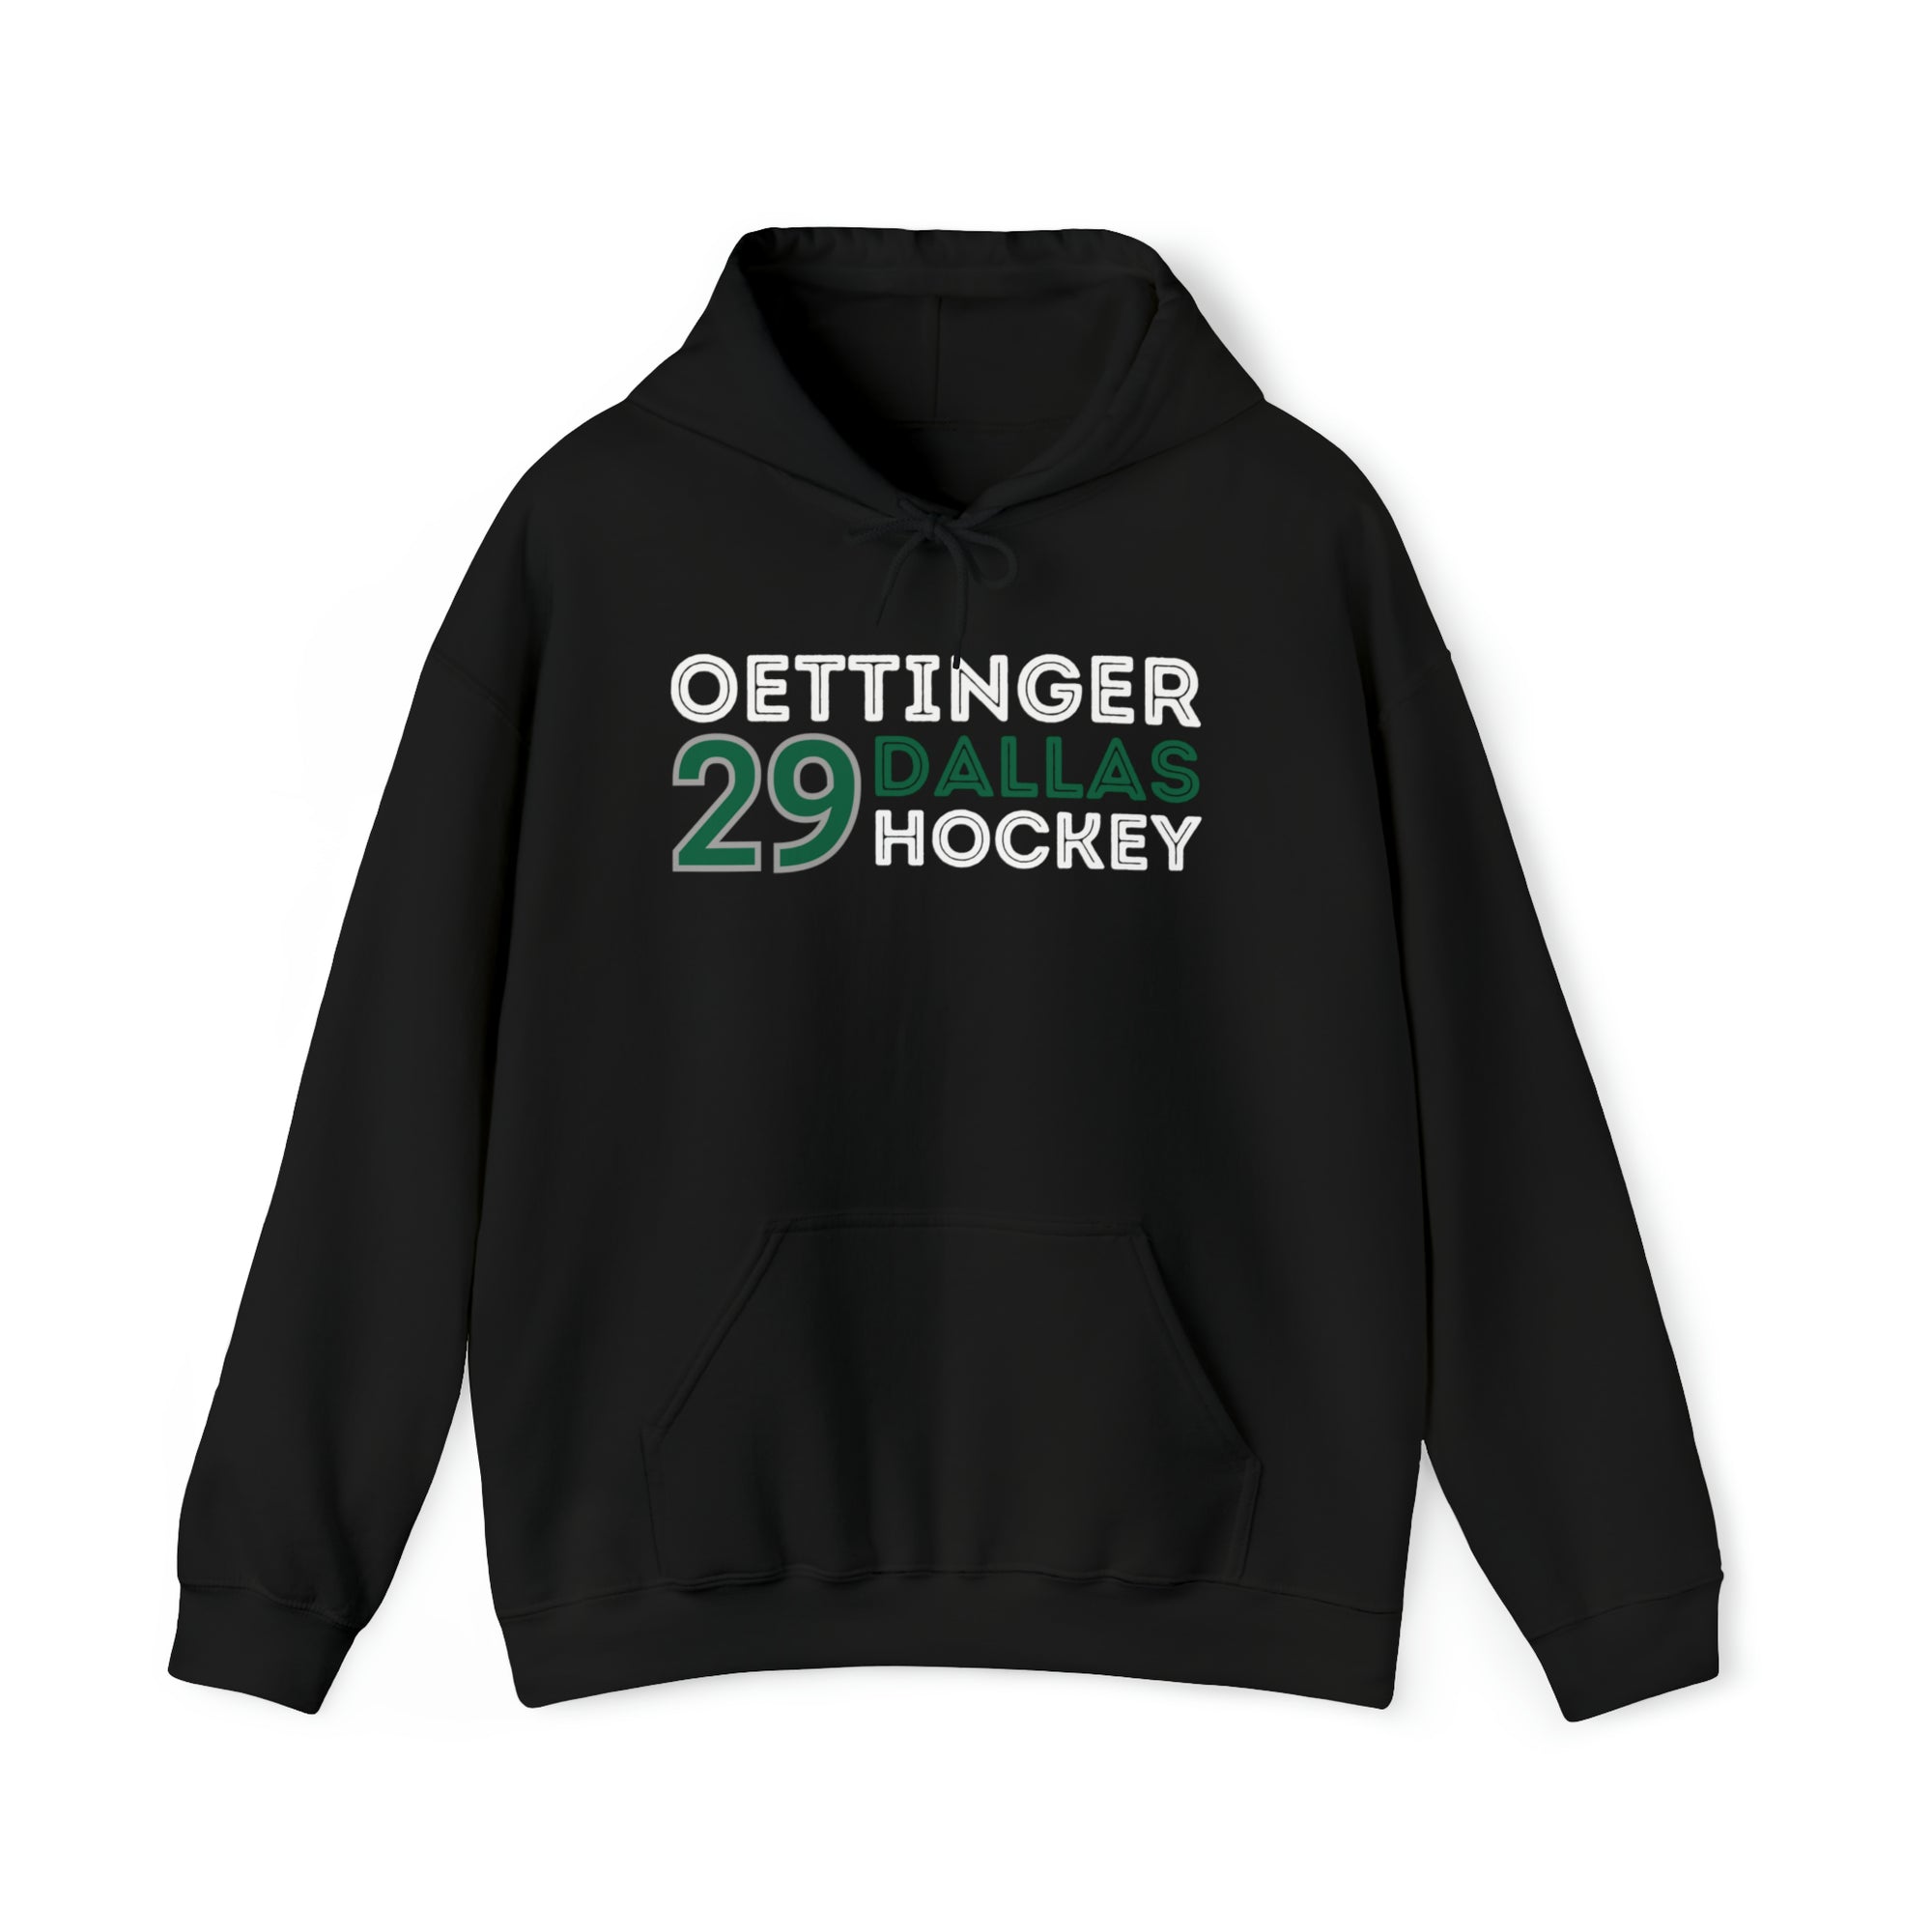 SALE!! Dallas Stars Jake Oettinger Hockey Otter T-Shirt S-5Xl Gift